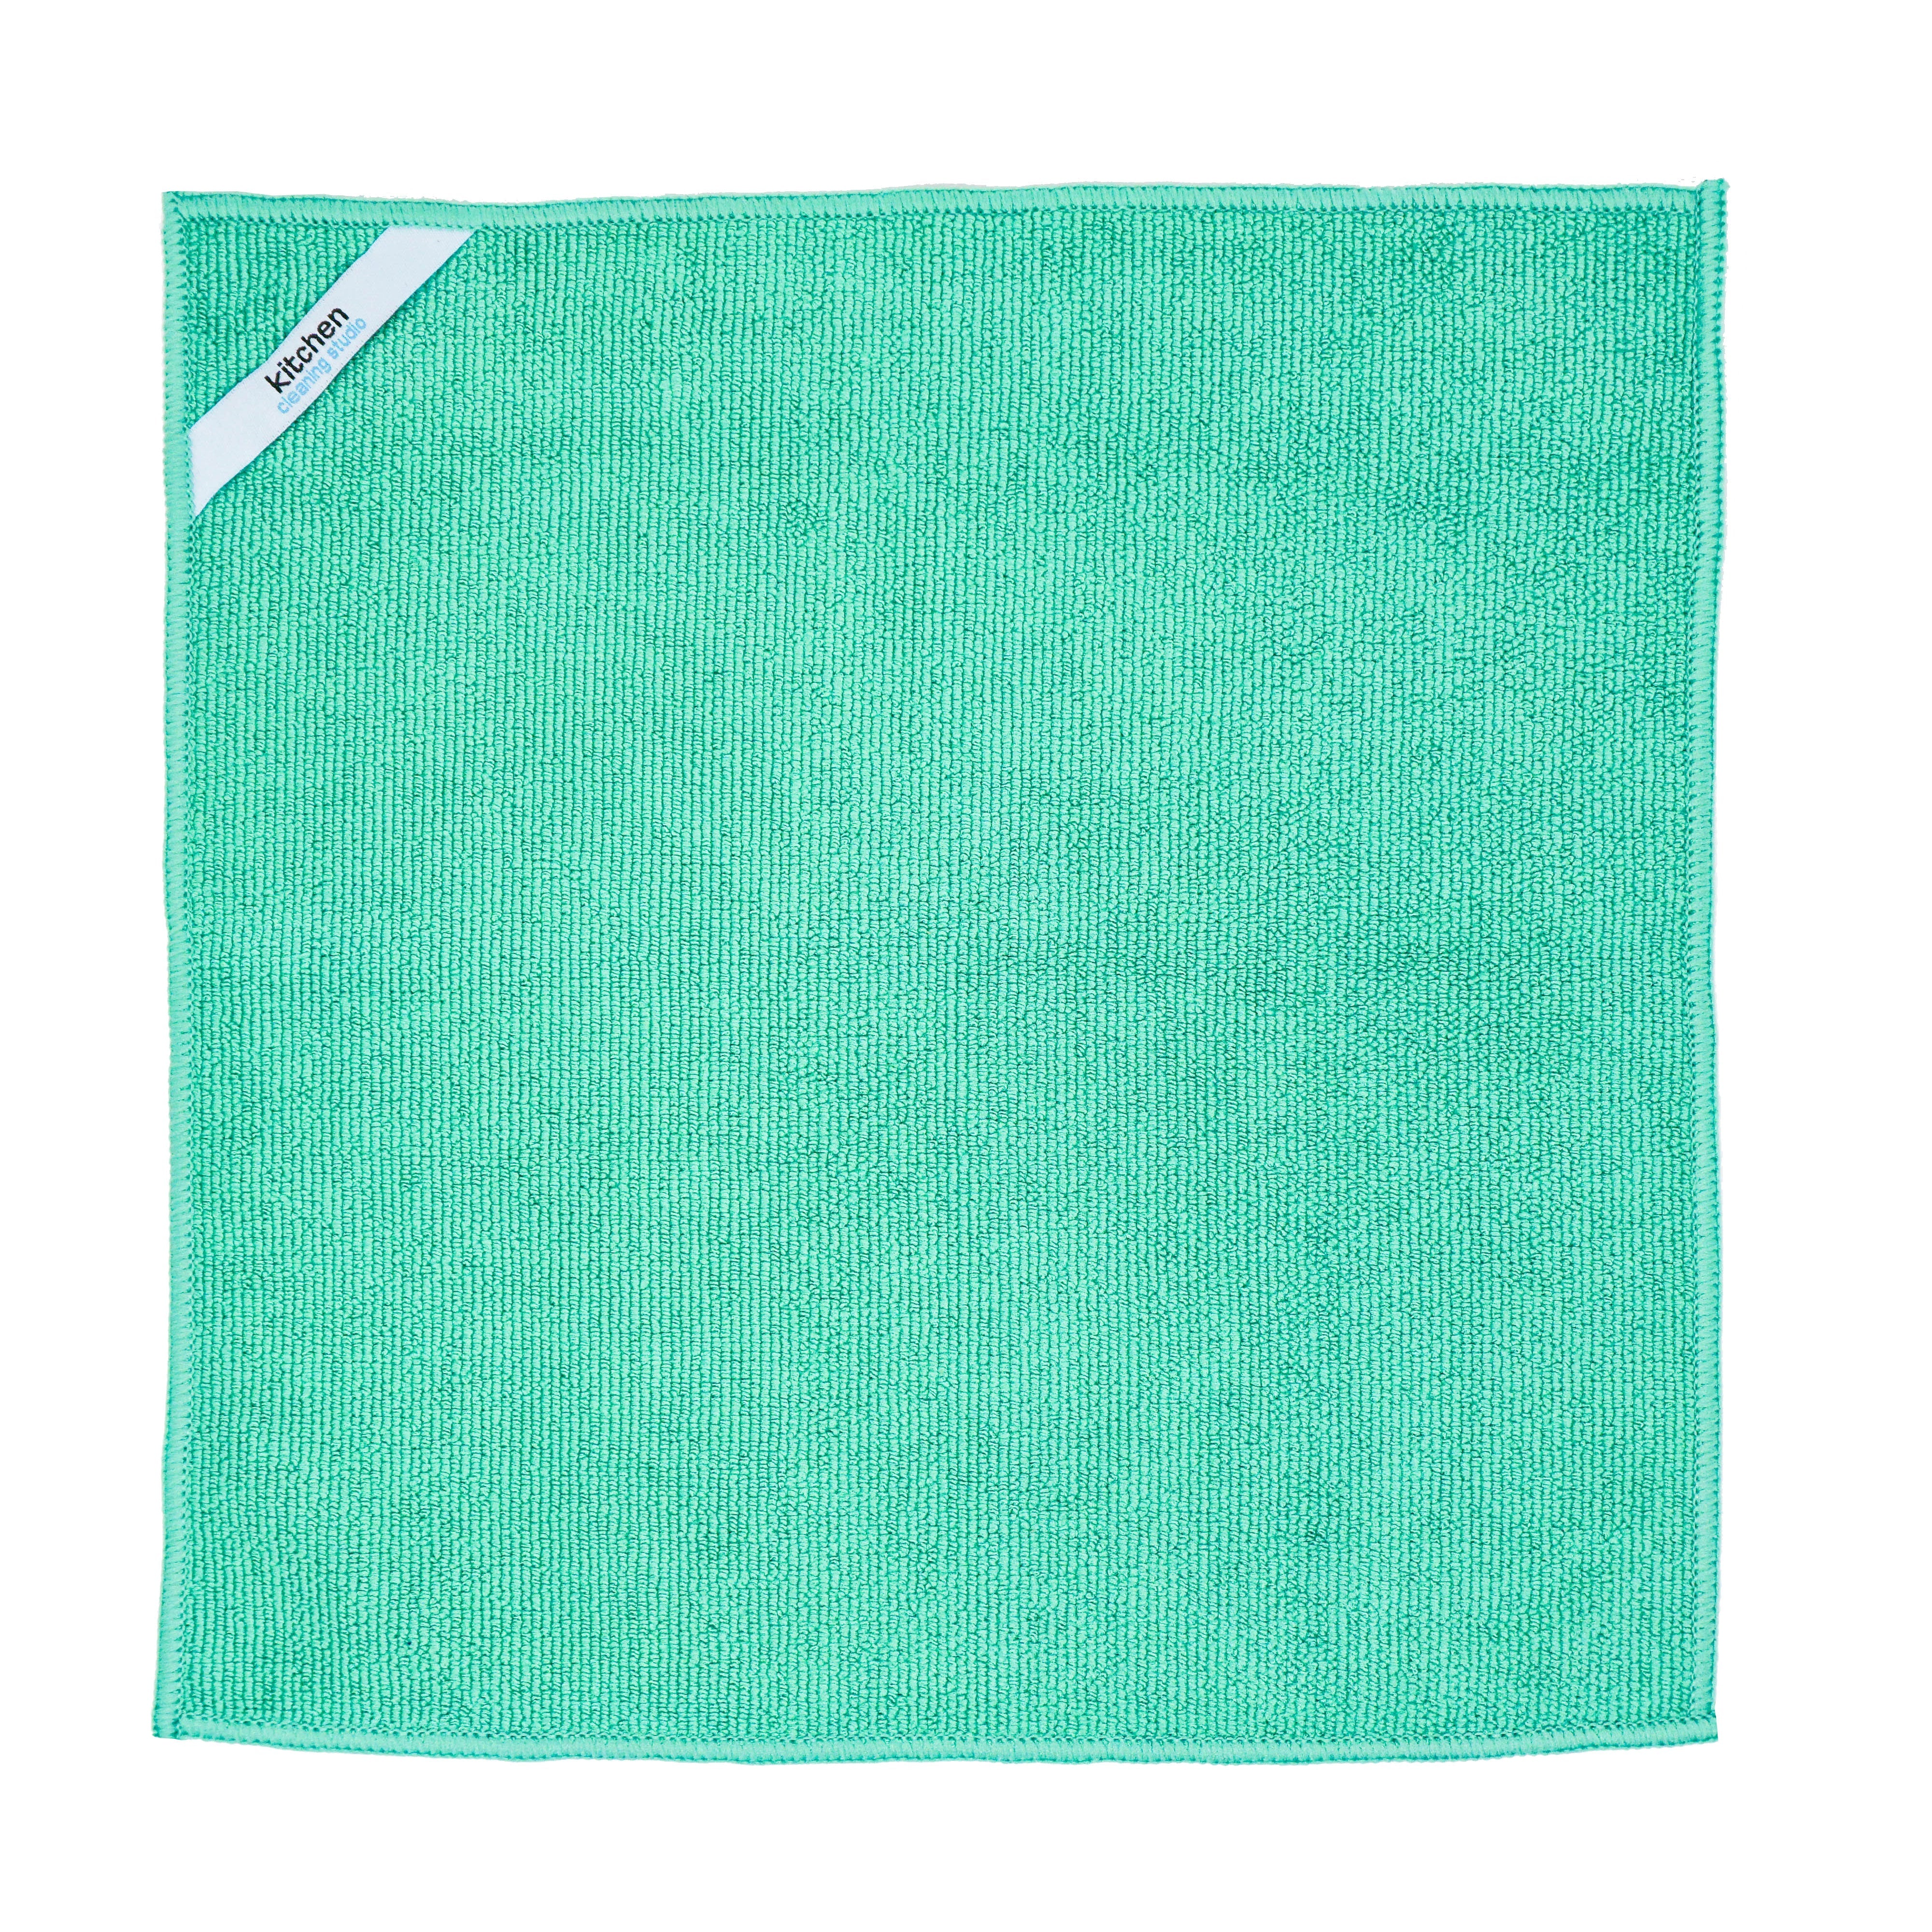 All-Purpose Microfiber Cleaning Towel